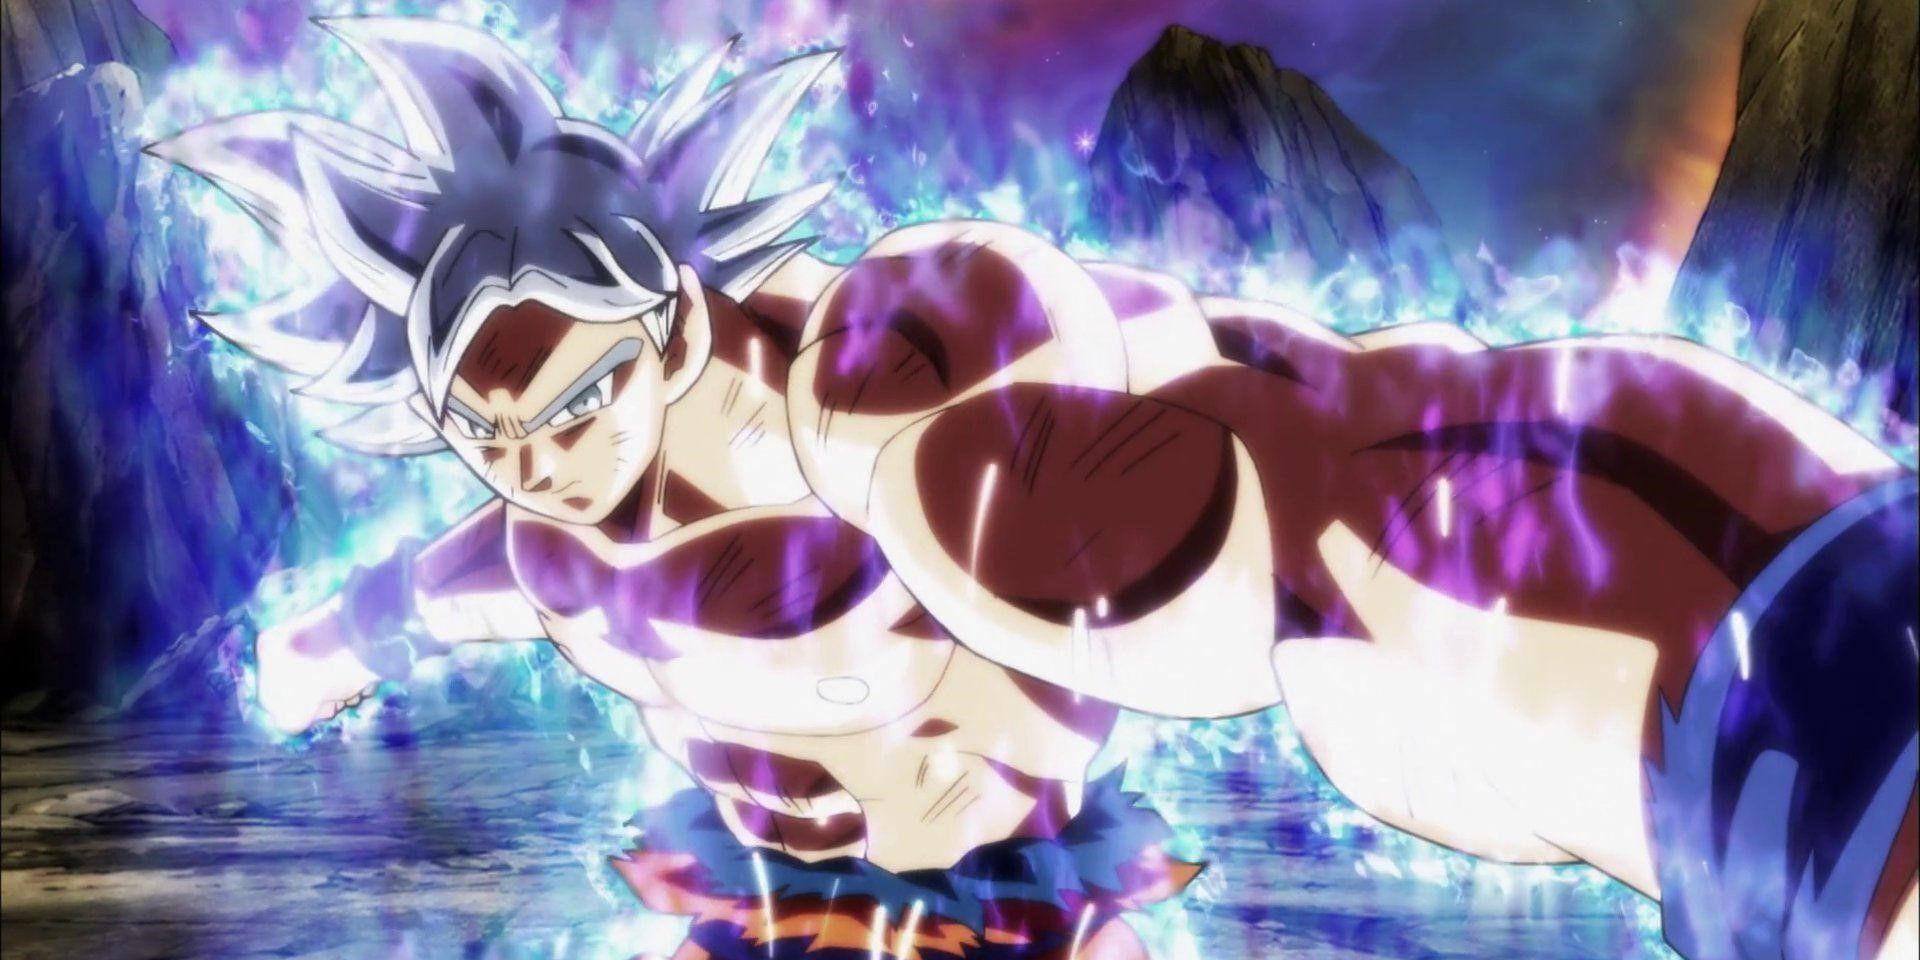 Dragon Ball Super Reveals Goku's Ultra Instinct and Vegeta's Ultra